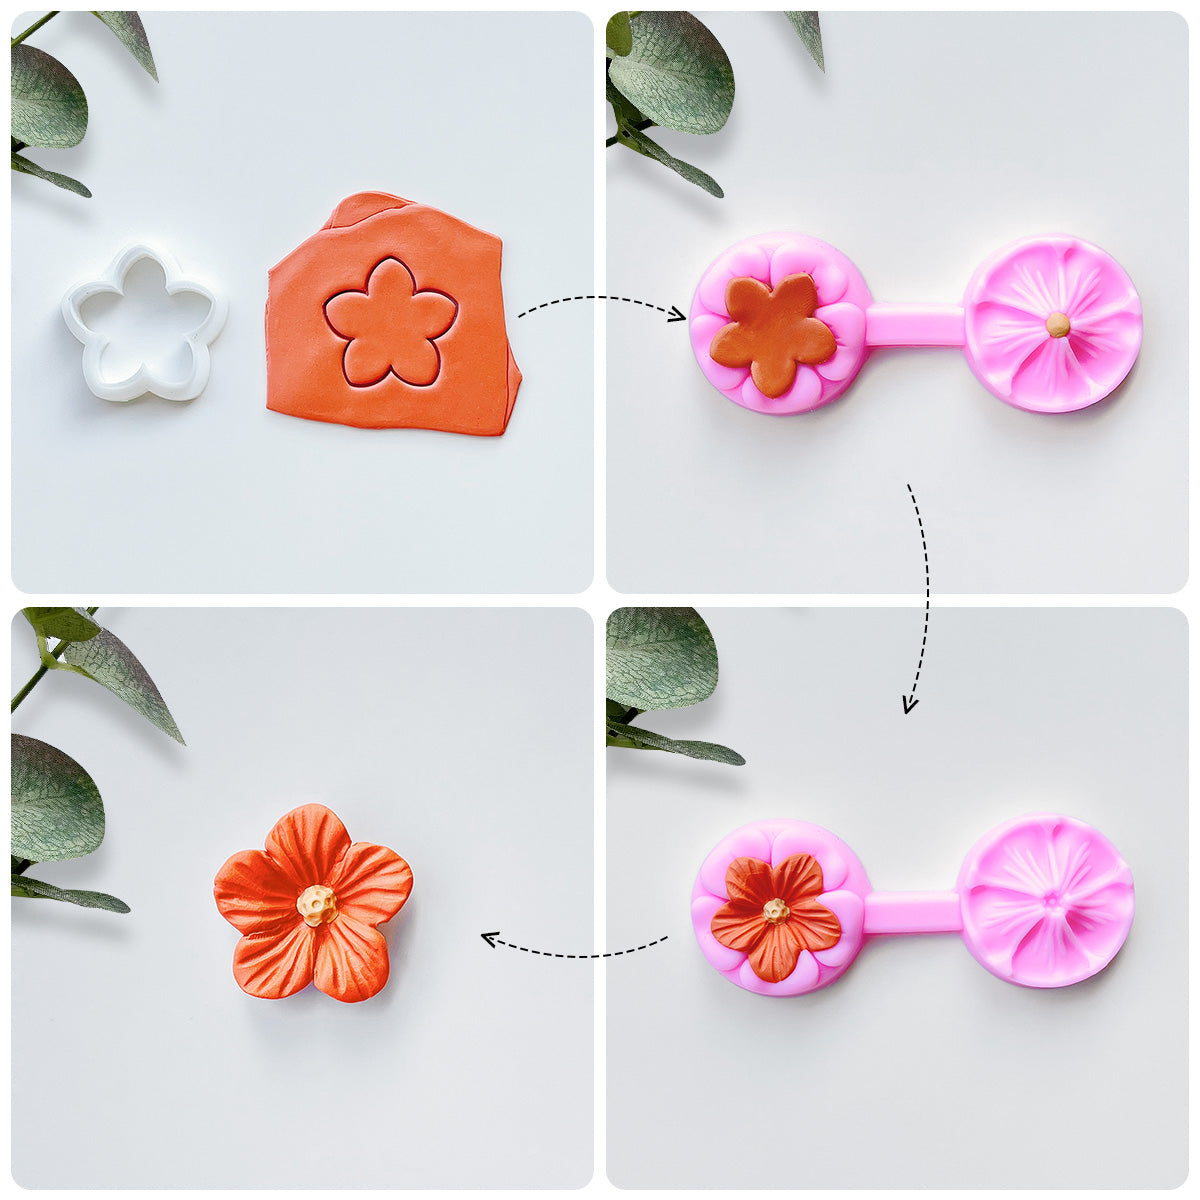 Keoker Mini Polymer Clay Cutters 15 Shapes Mini Flower Polymer